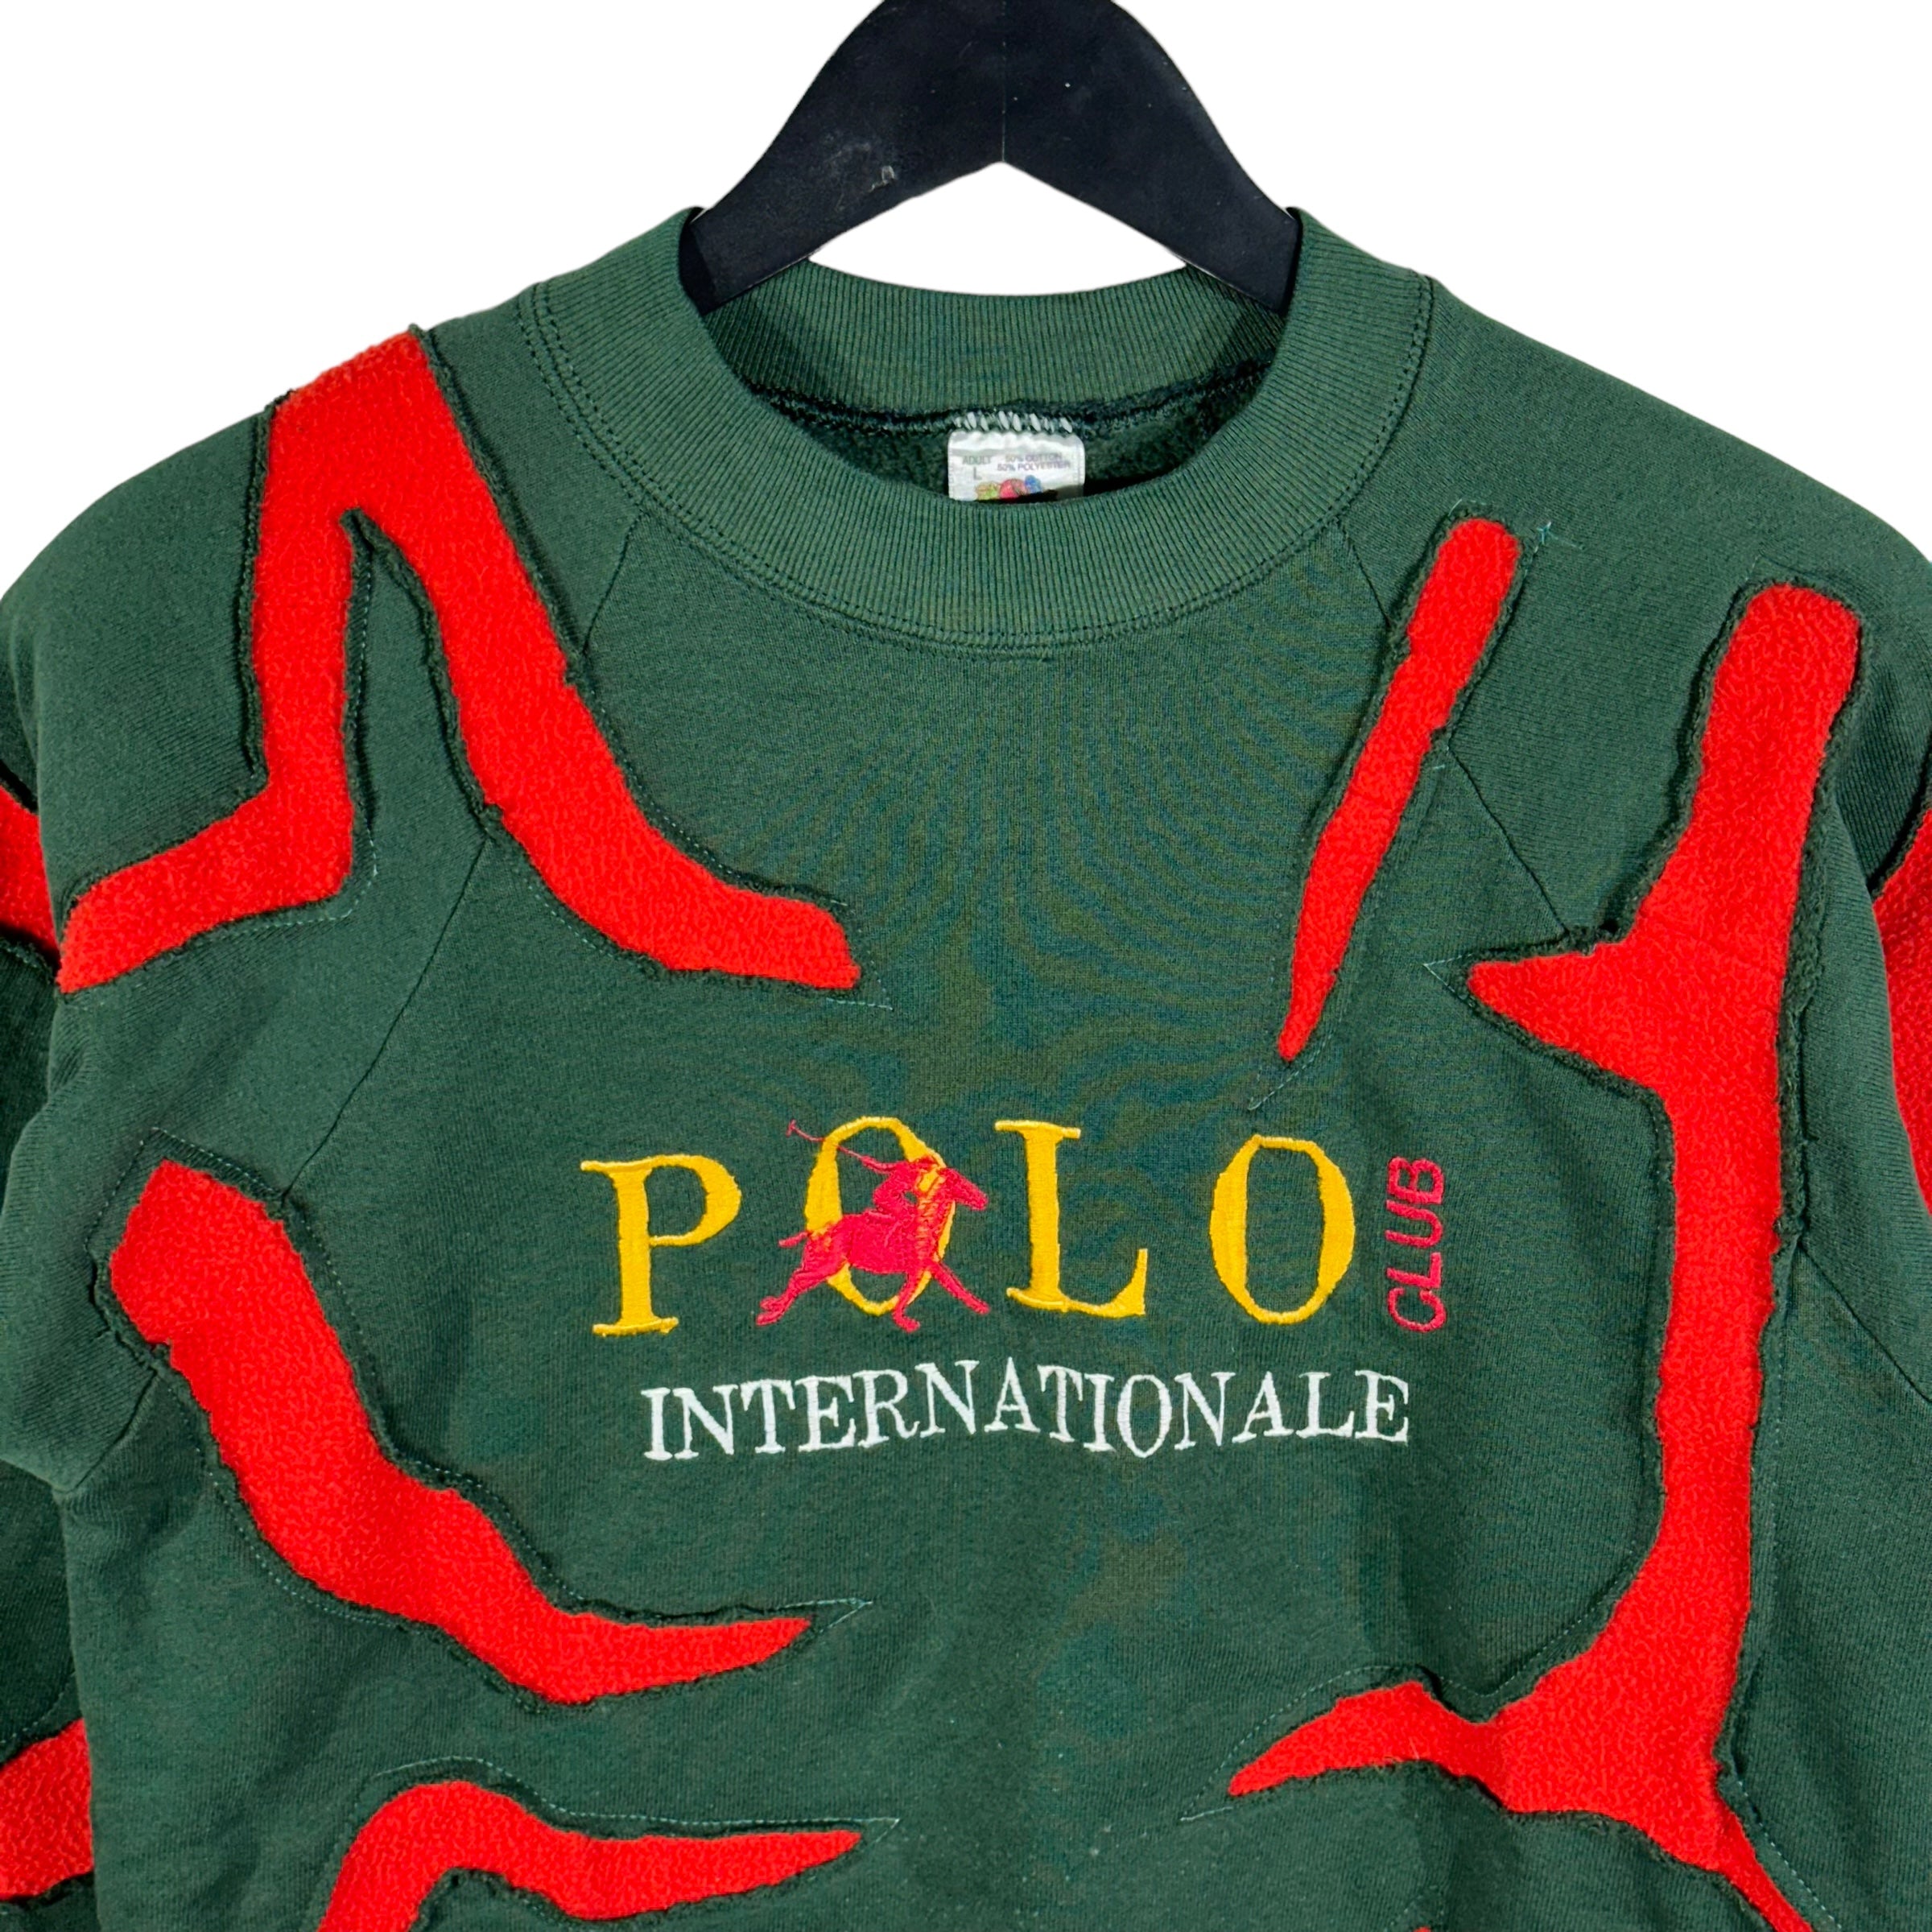 Vintage Cut & Sew Polo Club Internationals Crewneck